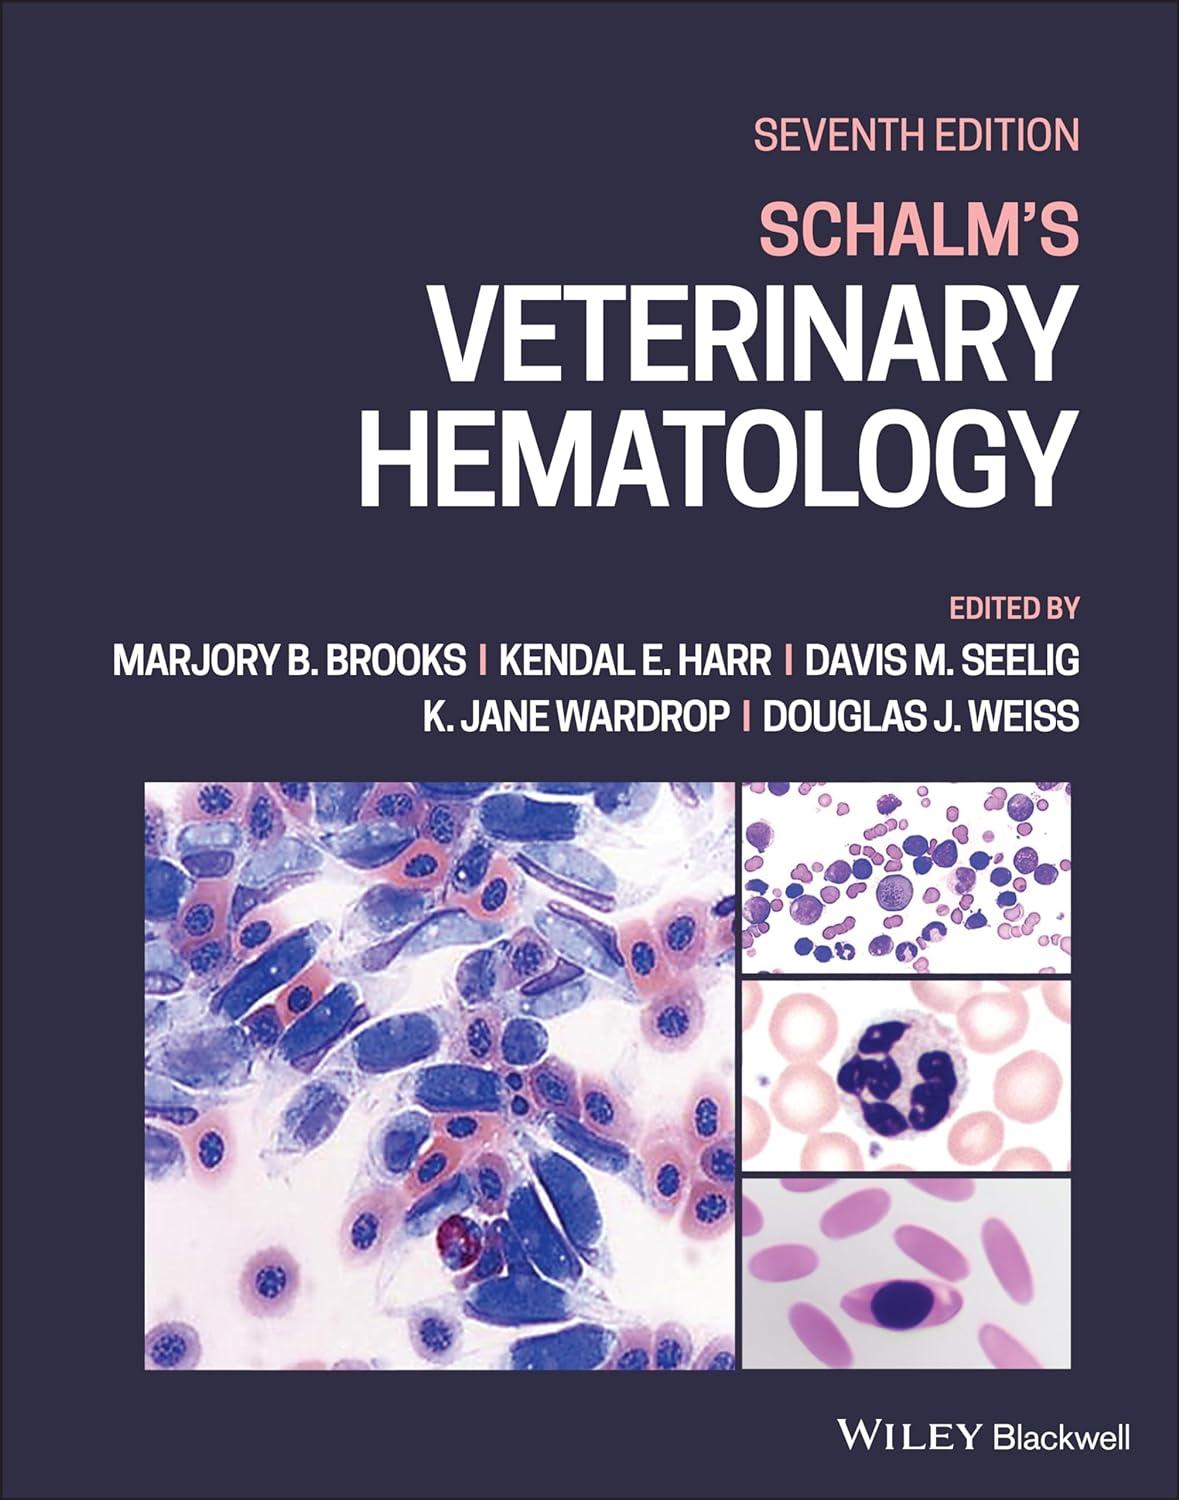 schalm s veterinary hematology 7th edition marjory b. brooks, kendal e. harr, davis m. seelig, k. jane